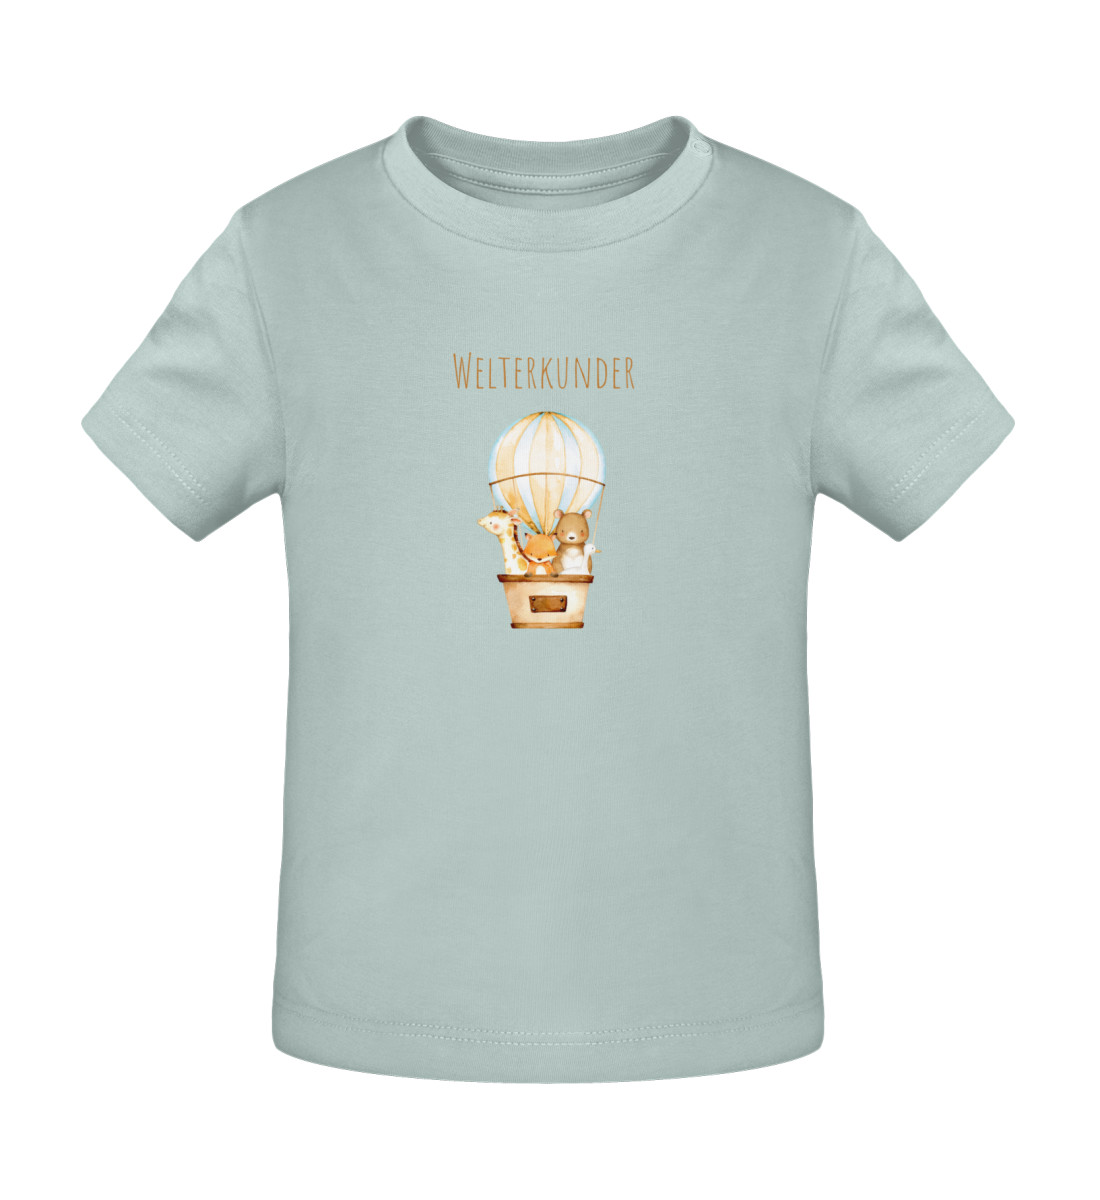 Welterkunder - Baby Creator T-Shirt ST/ST-7033